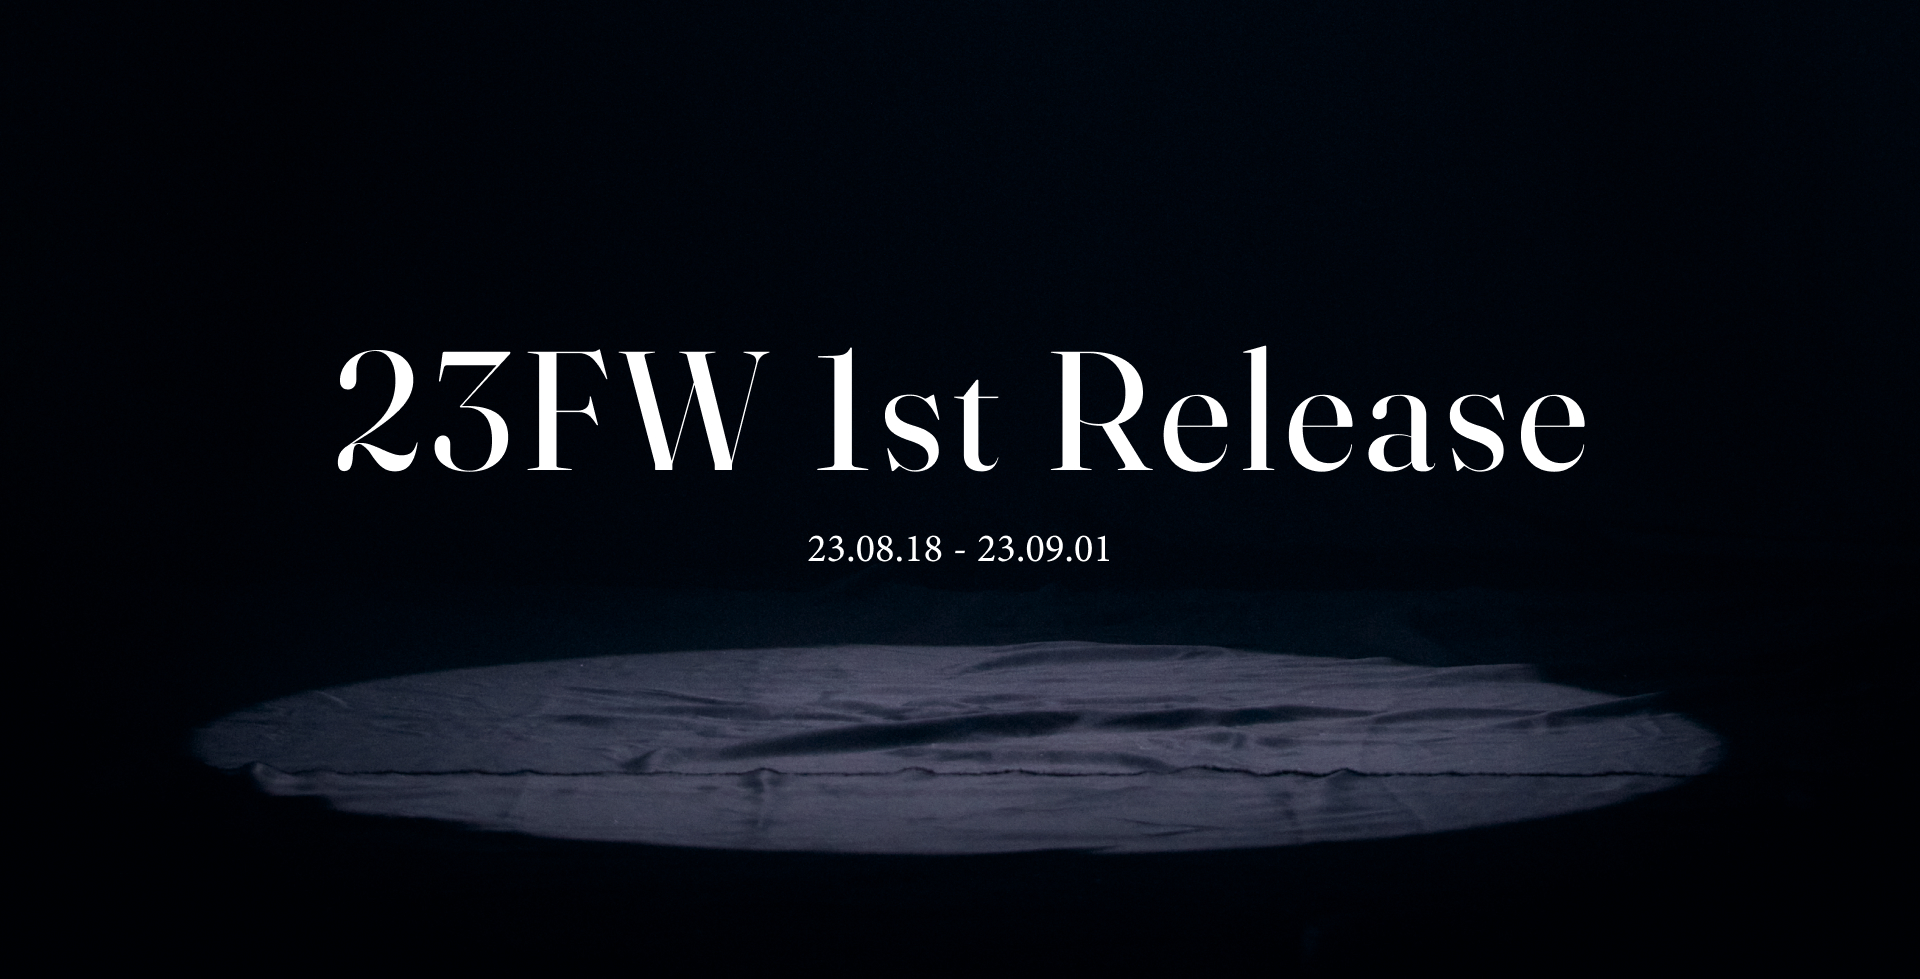 23fw 1st release